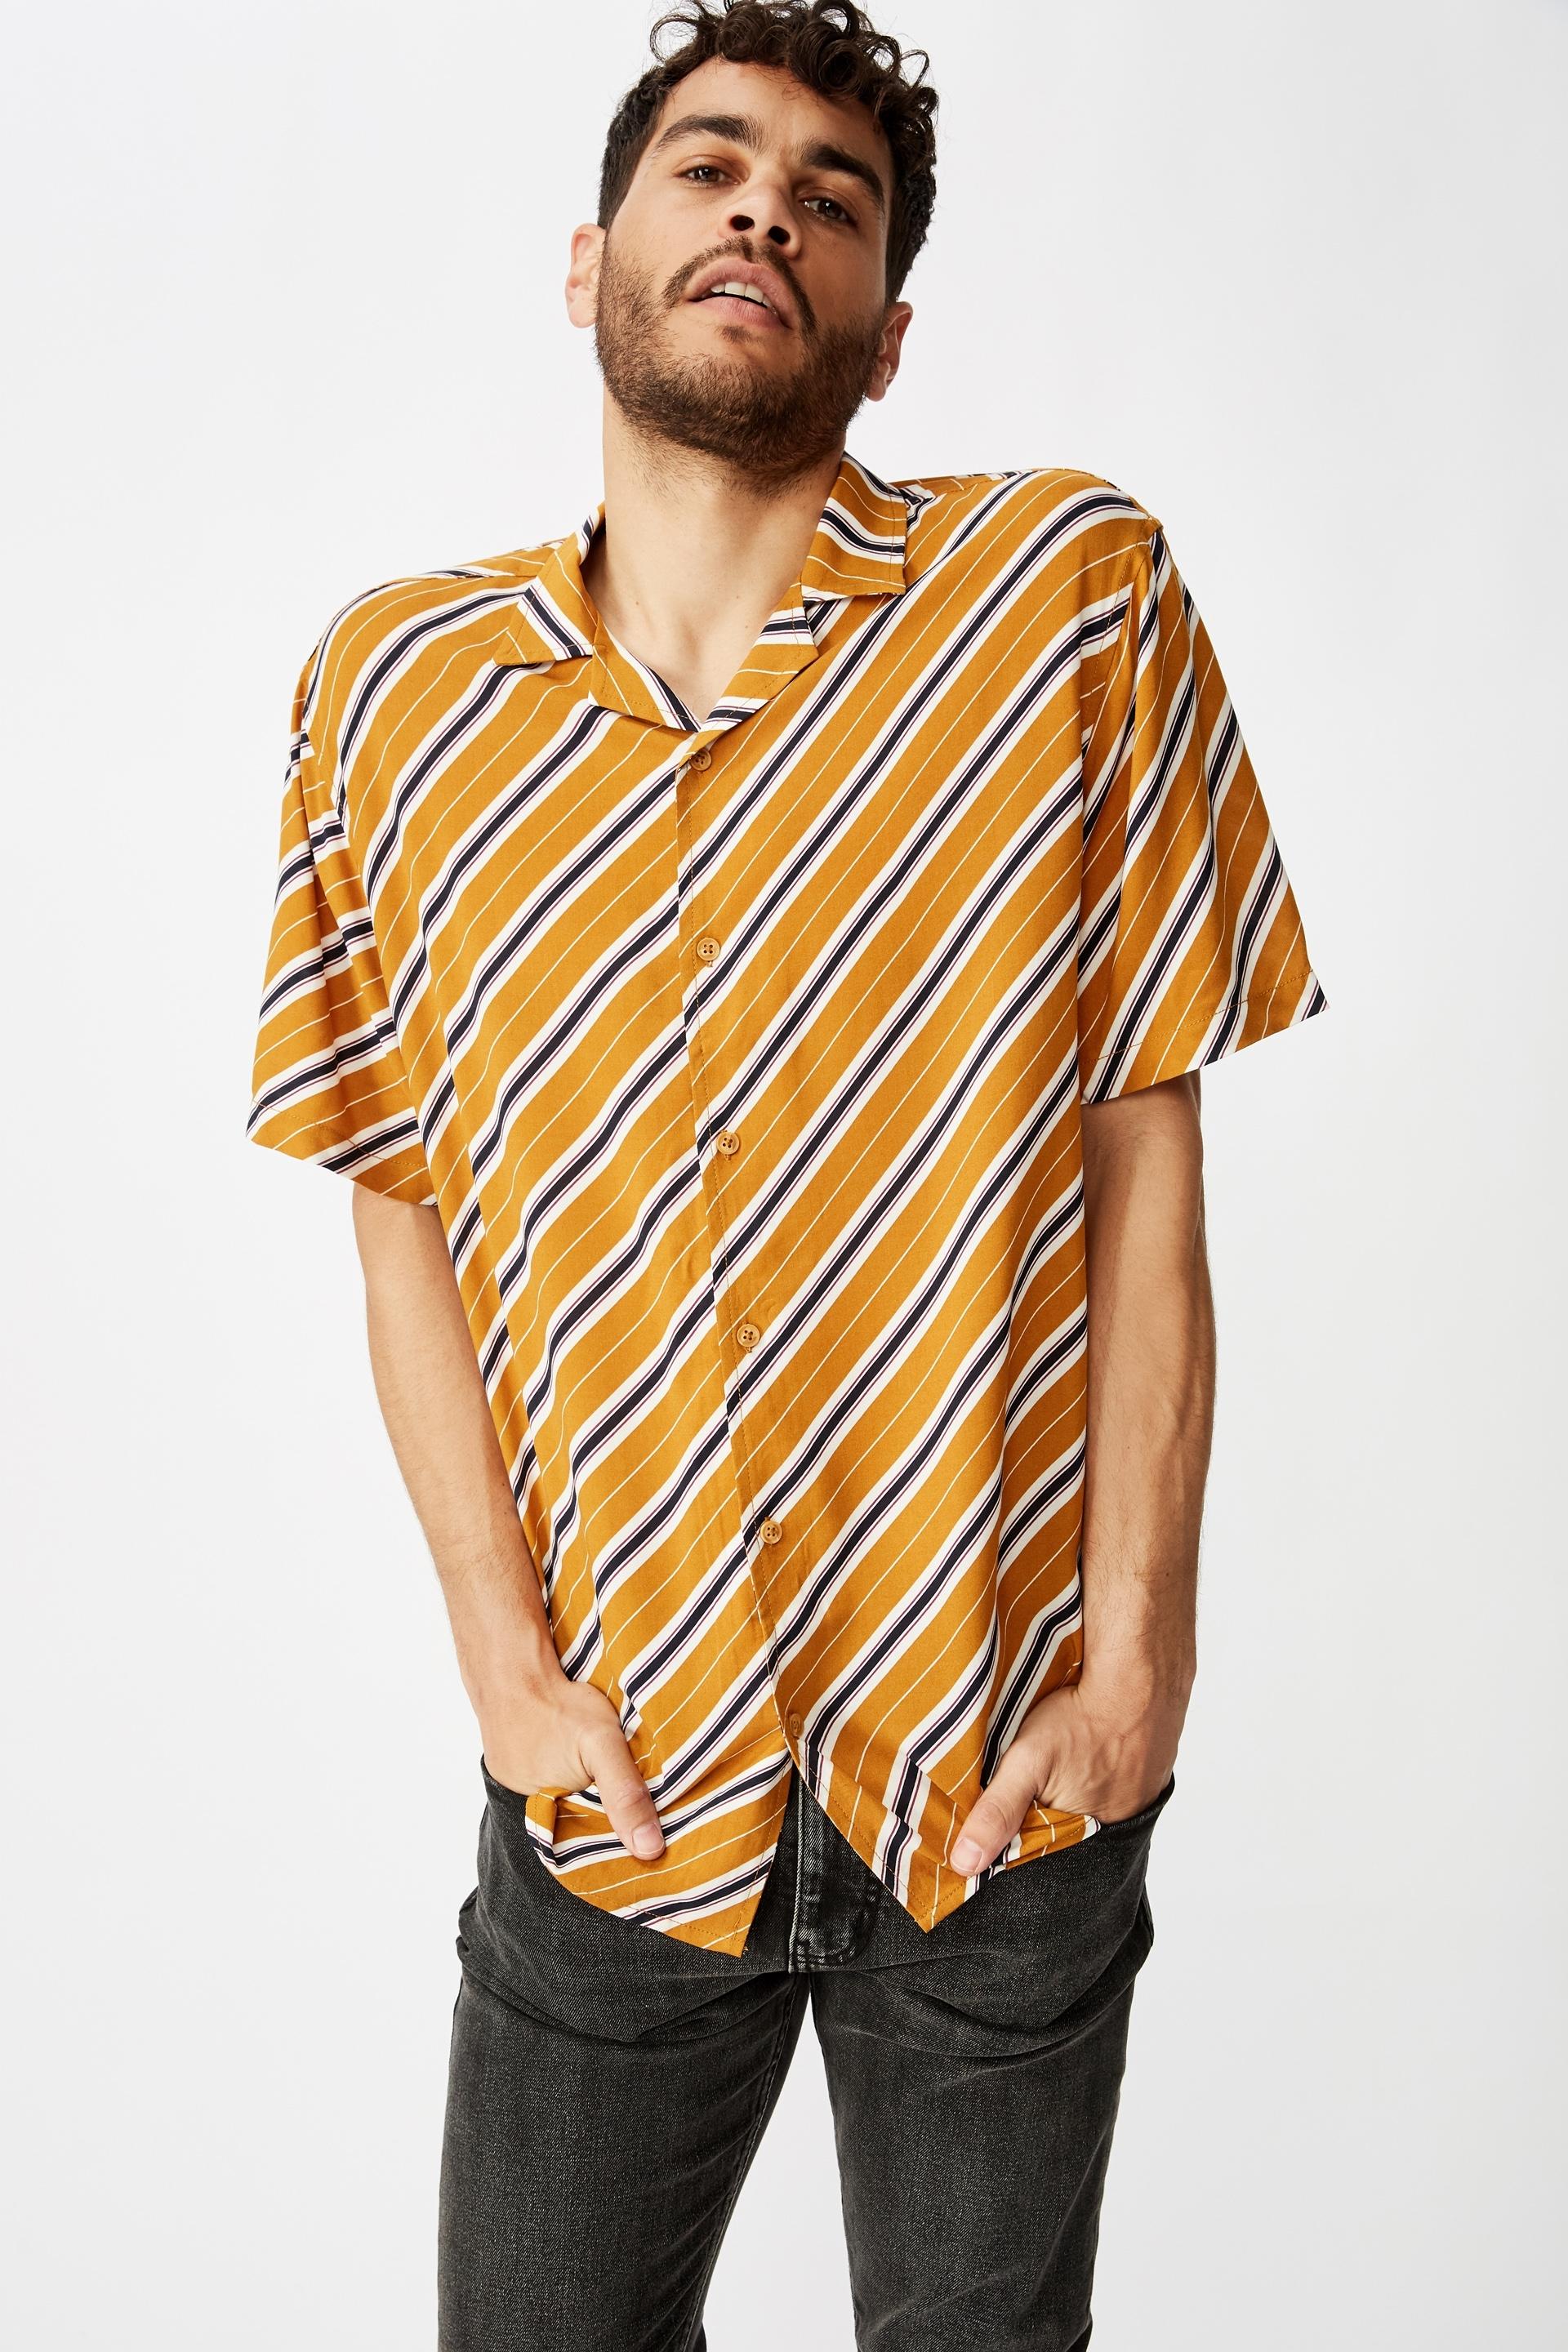 Festival short sleeve shirt - mustard angled stripe Cotton On Shirts ...